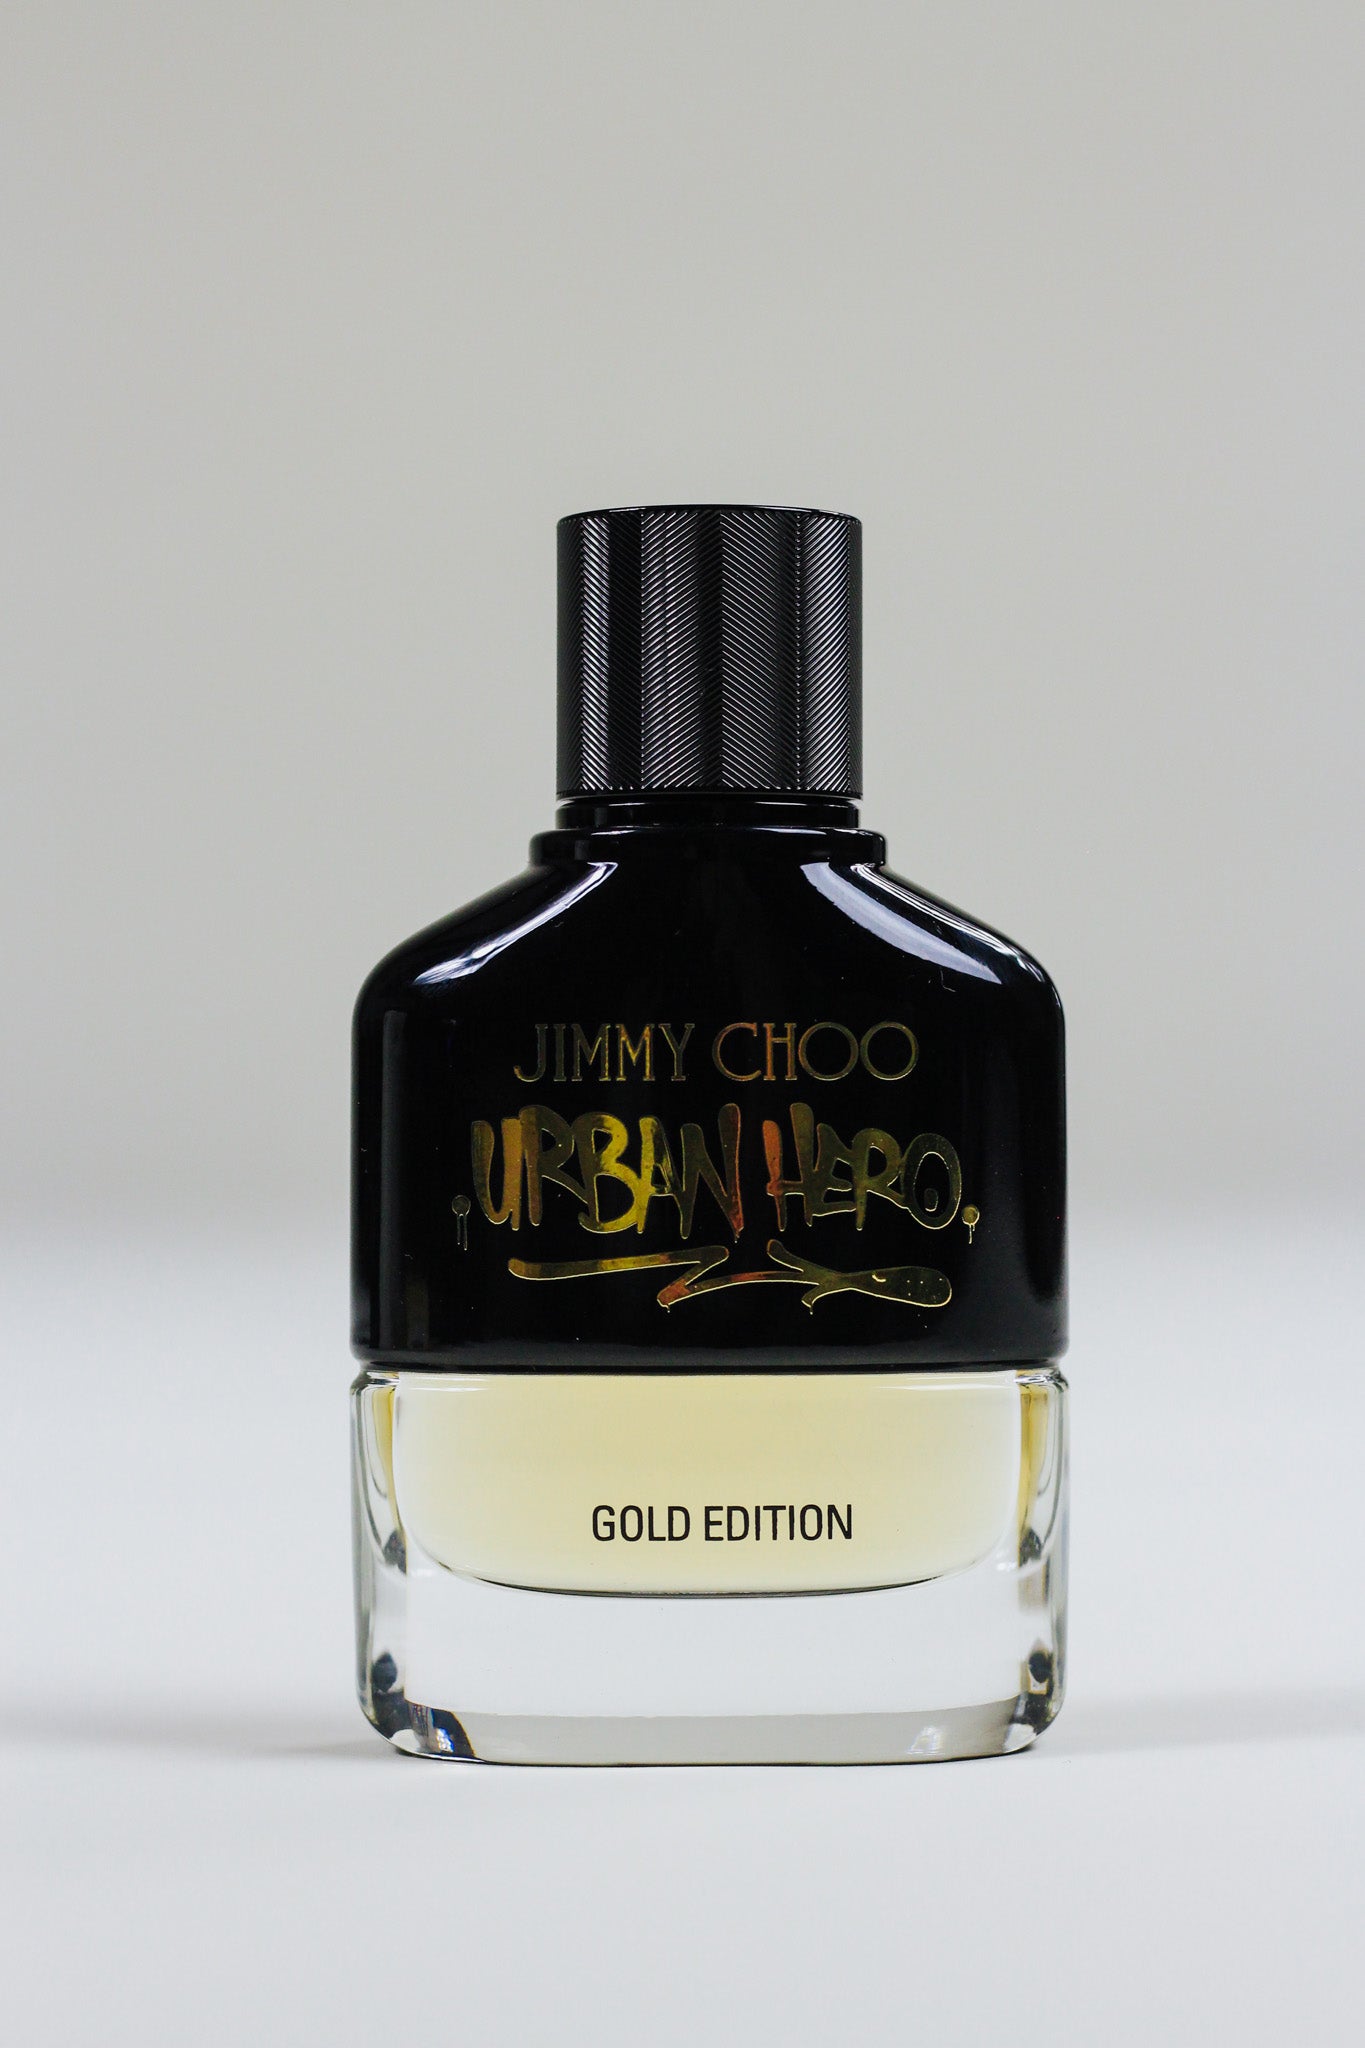 Jimmy Choo Urban Hero Eau Parfum – Spray Dales Inc De Clothing